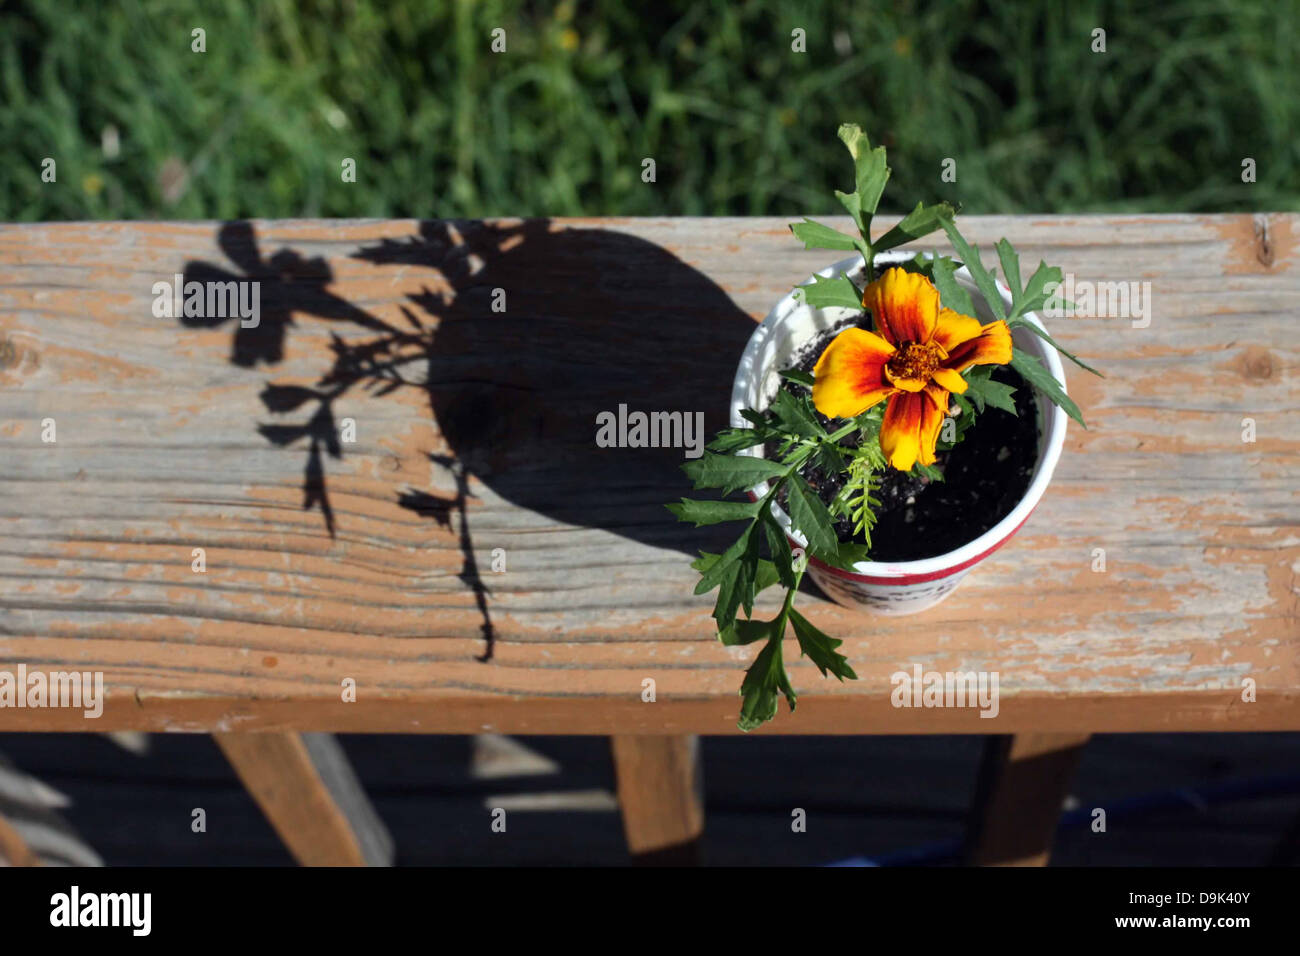 flower floral plant marigold outdoor shadow sun grass cup container garden Stock Photo